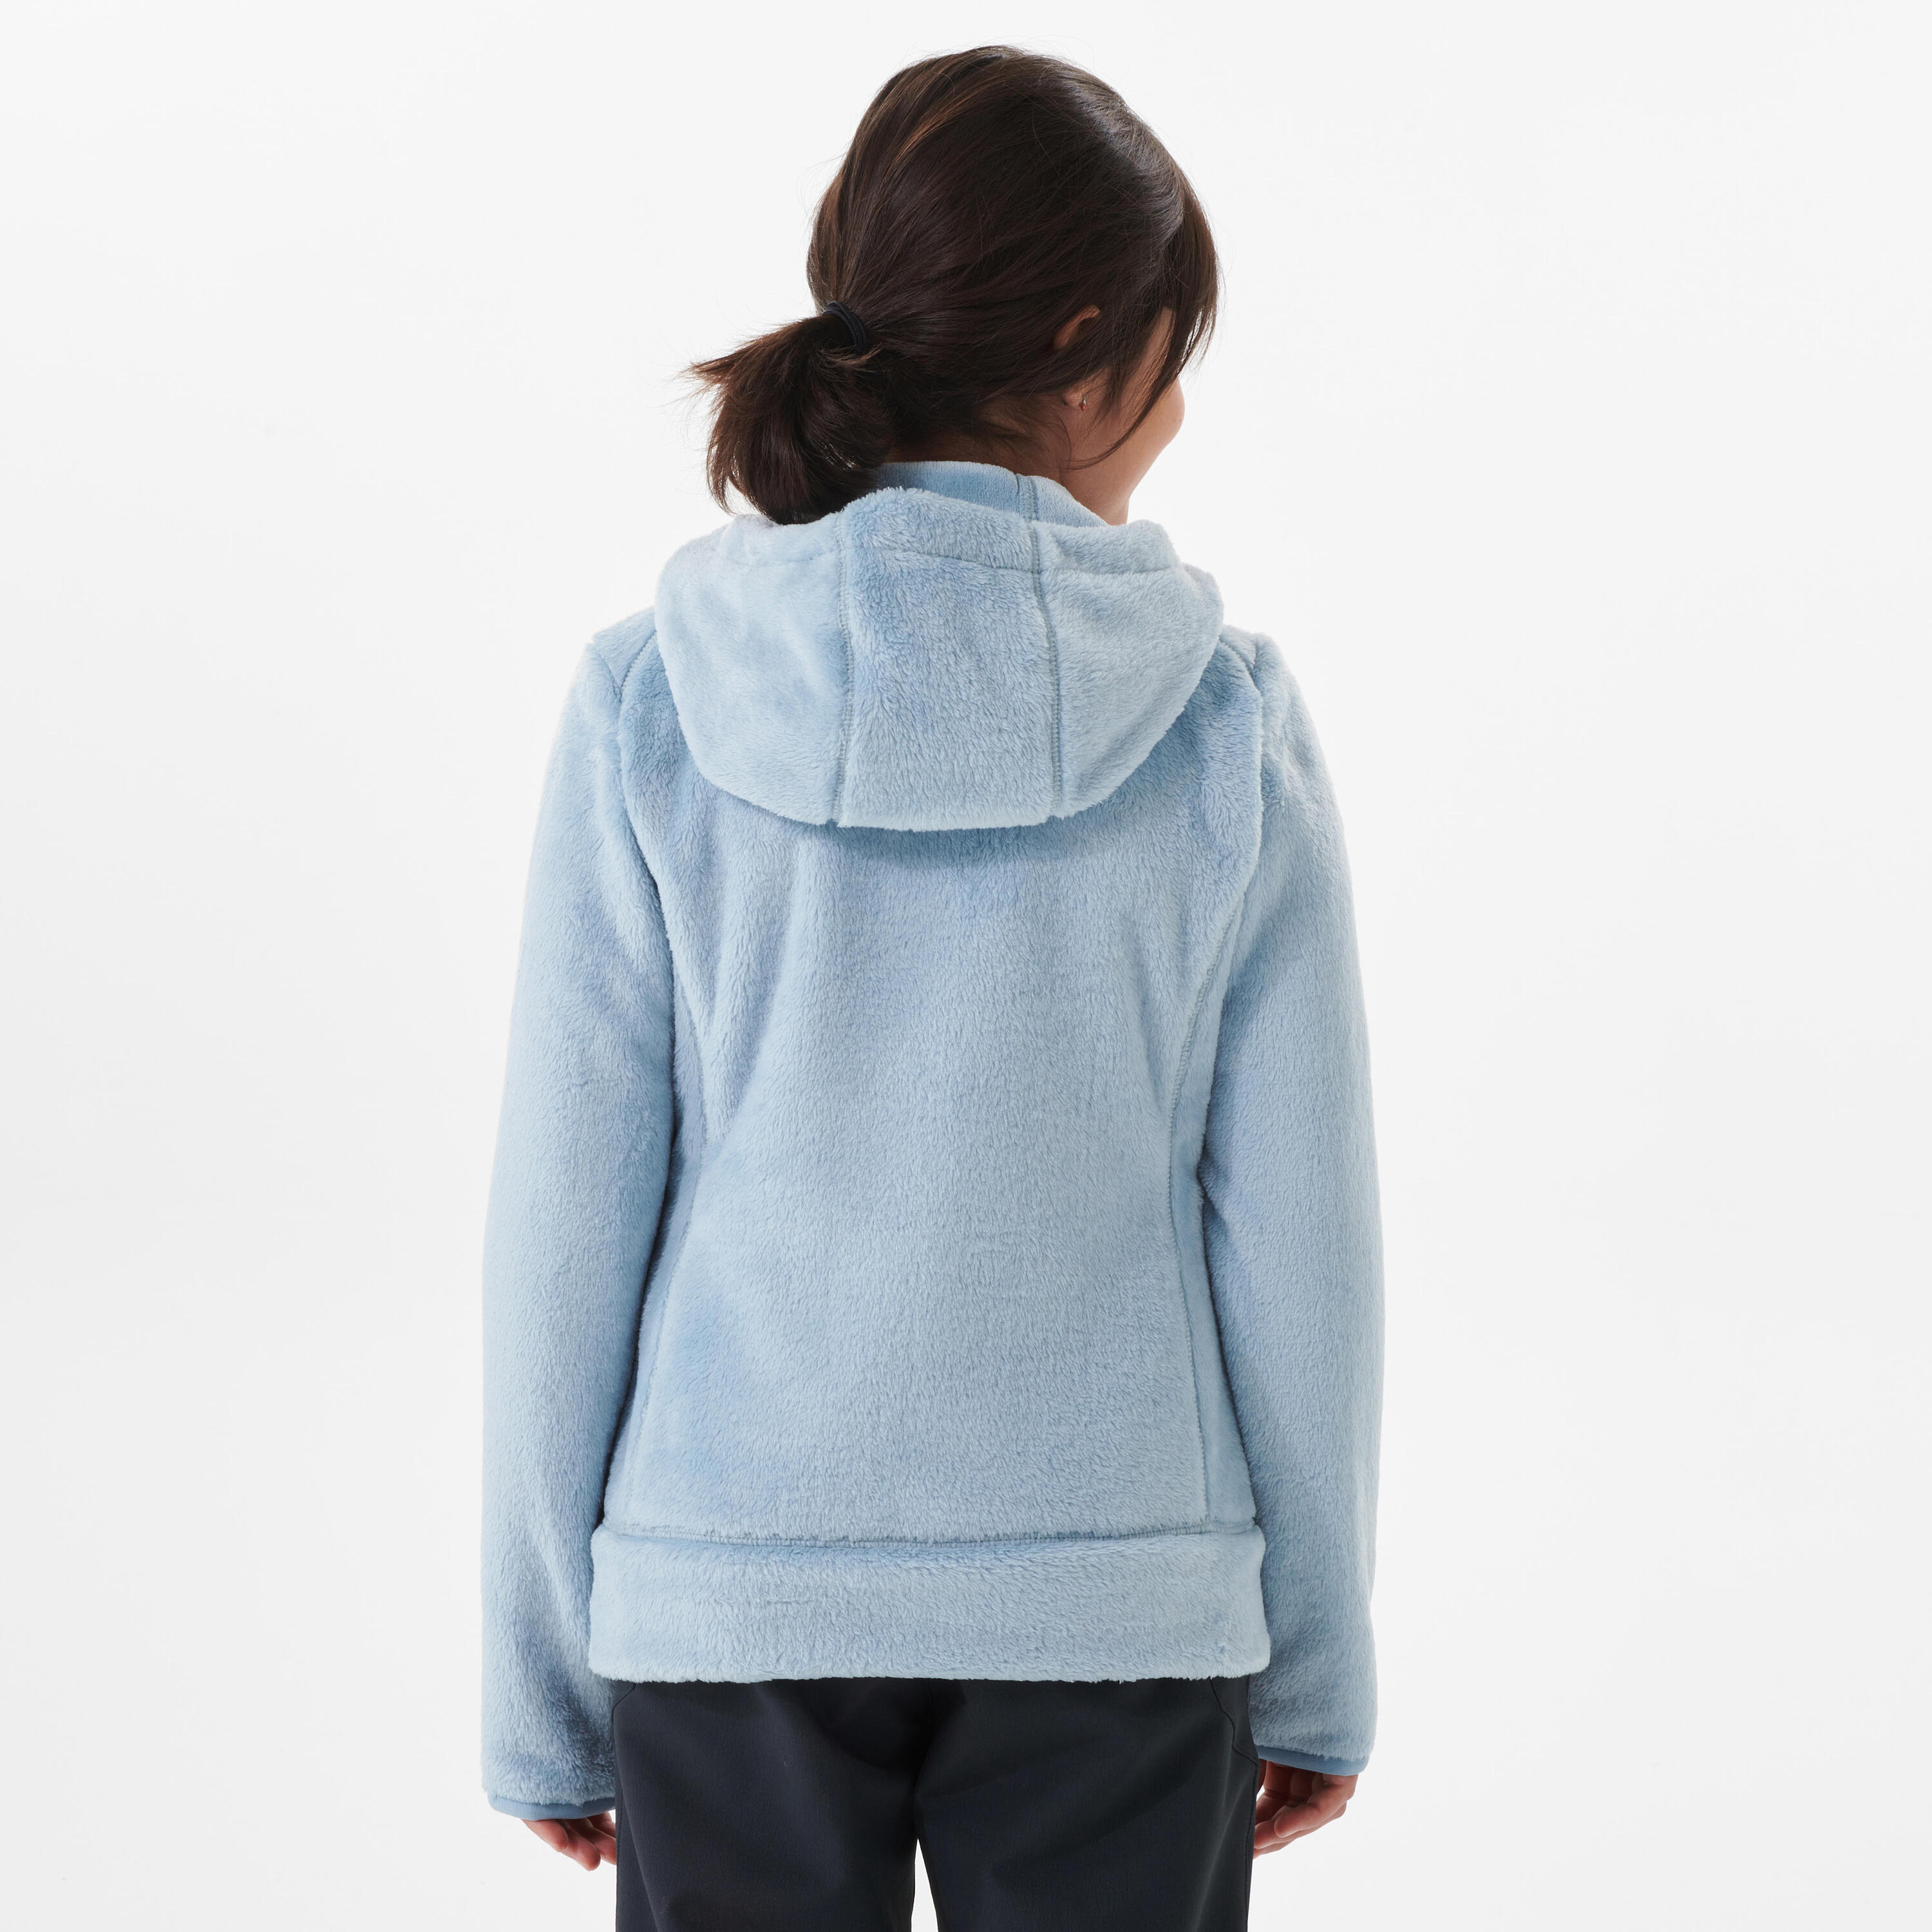 Kids’ Warm Hiking Fleece Jacket - MH500 Aged 7-15 - Blue Grey 3/6